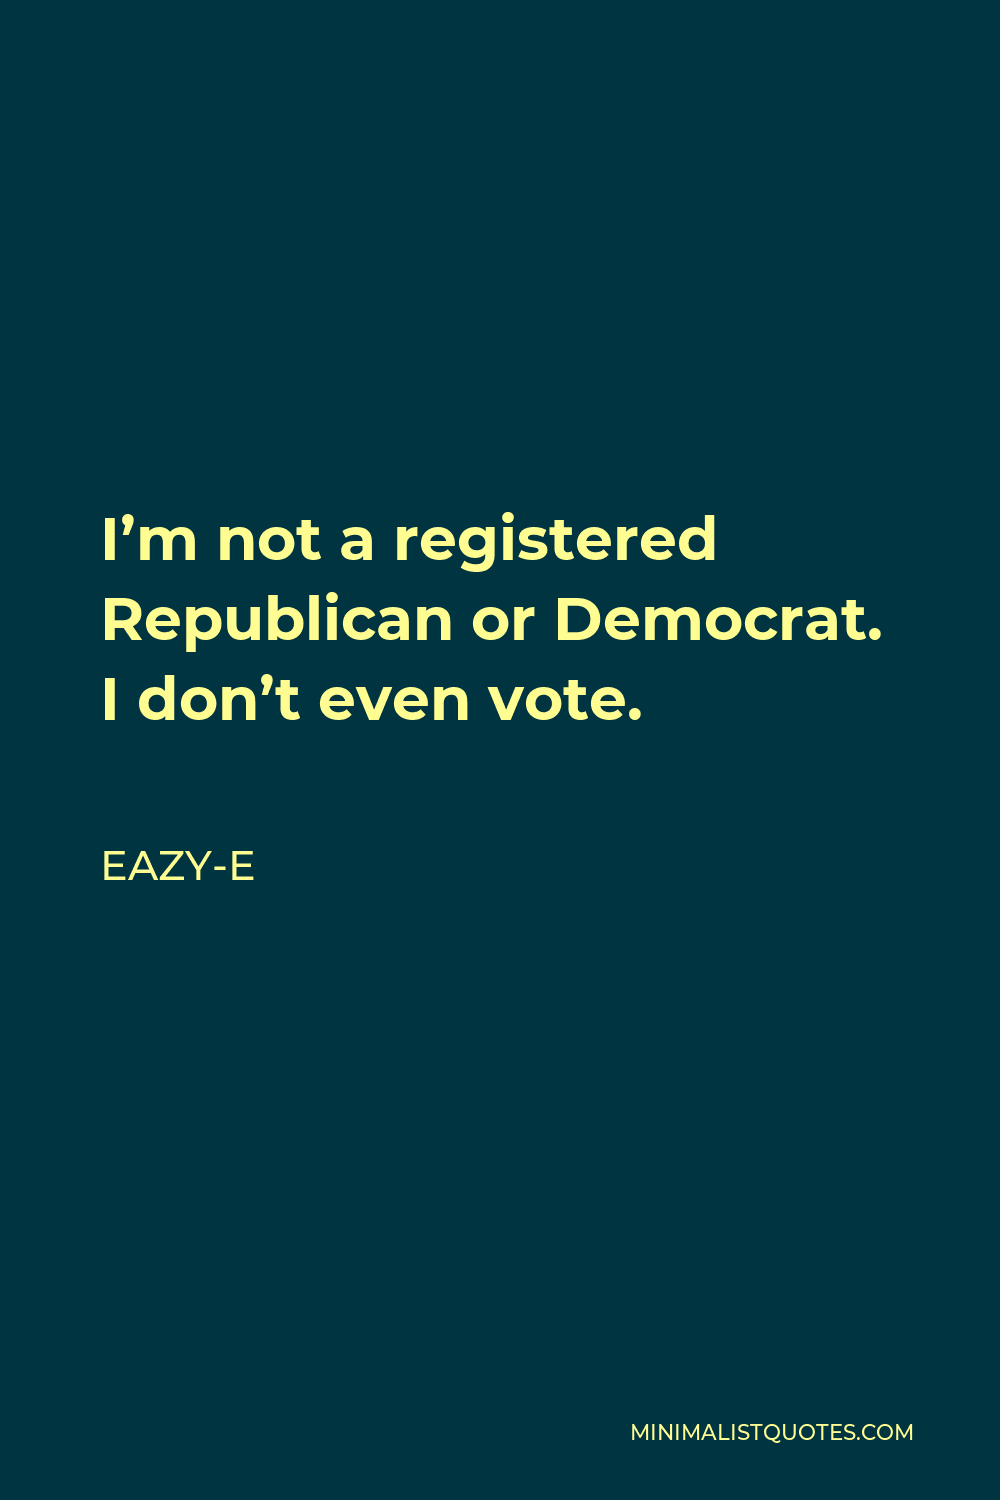 Eazy-E Quote - I’m not a registered Republican or Democrat. I don’t even vote.